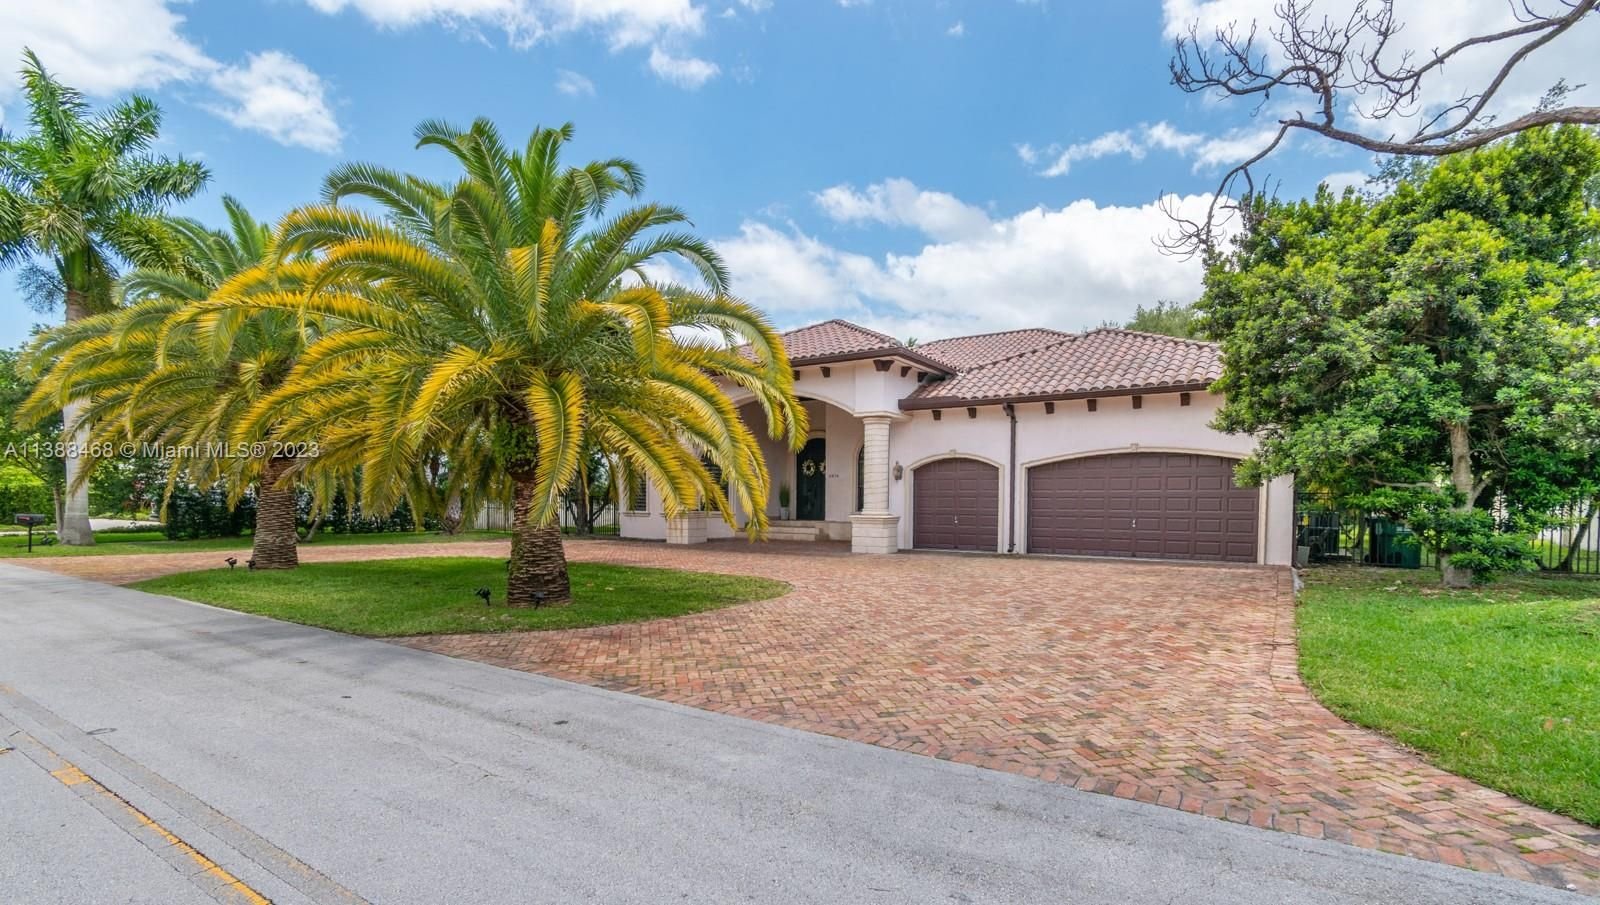 Real estate property located at 6874 57th Ter, Miami-Dade County, Miami, FL